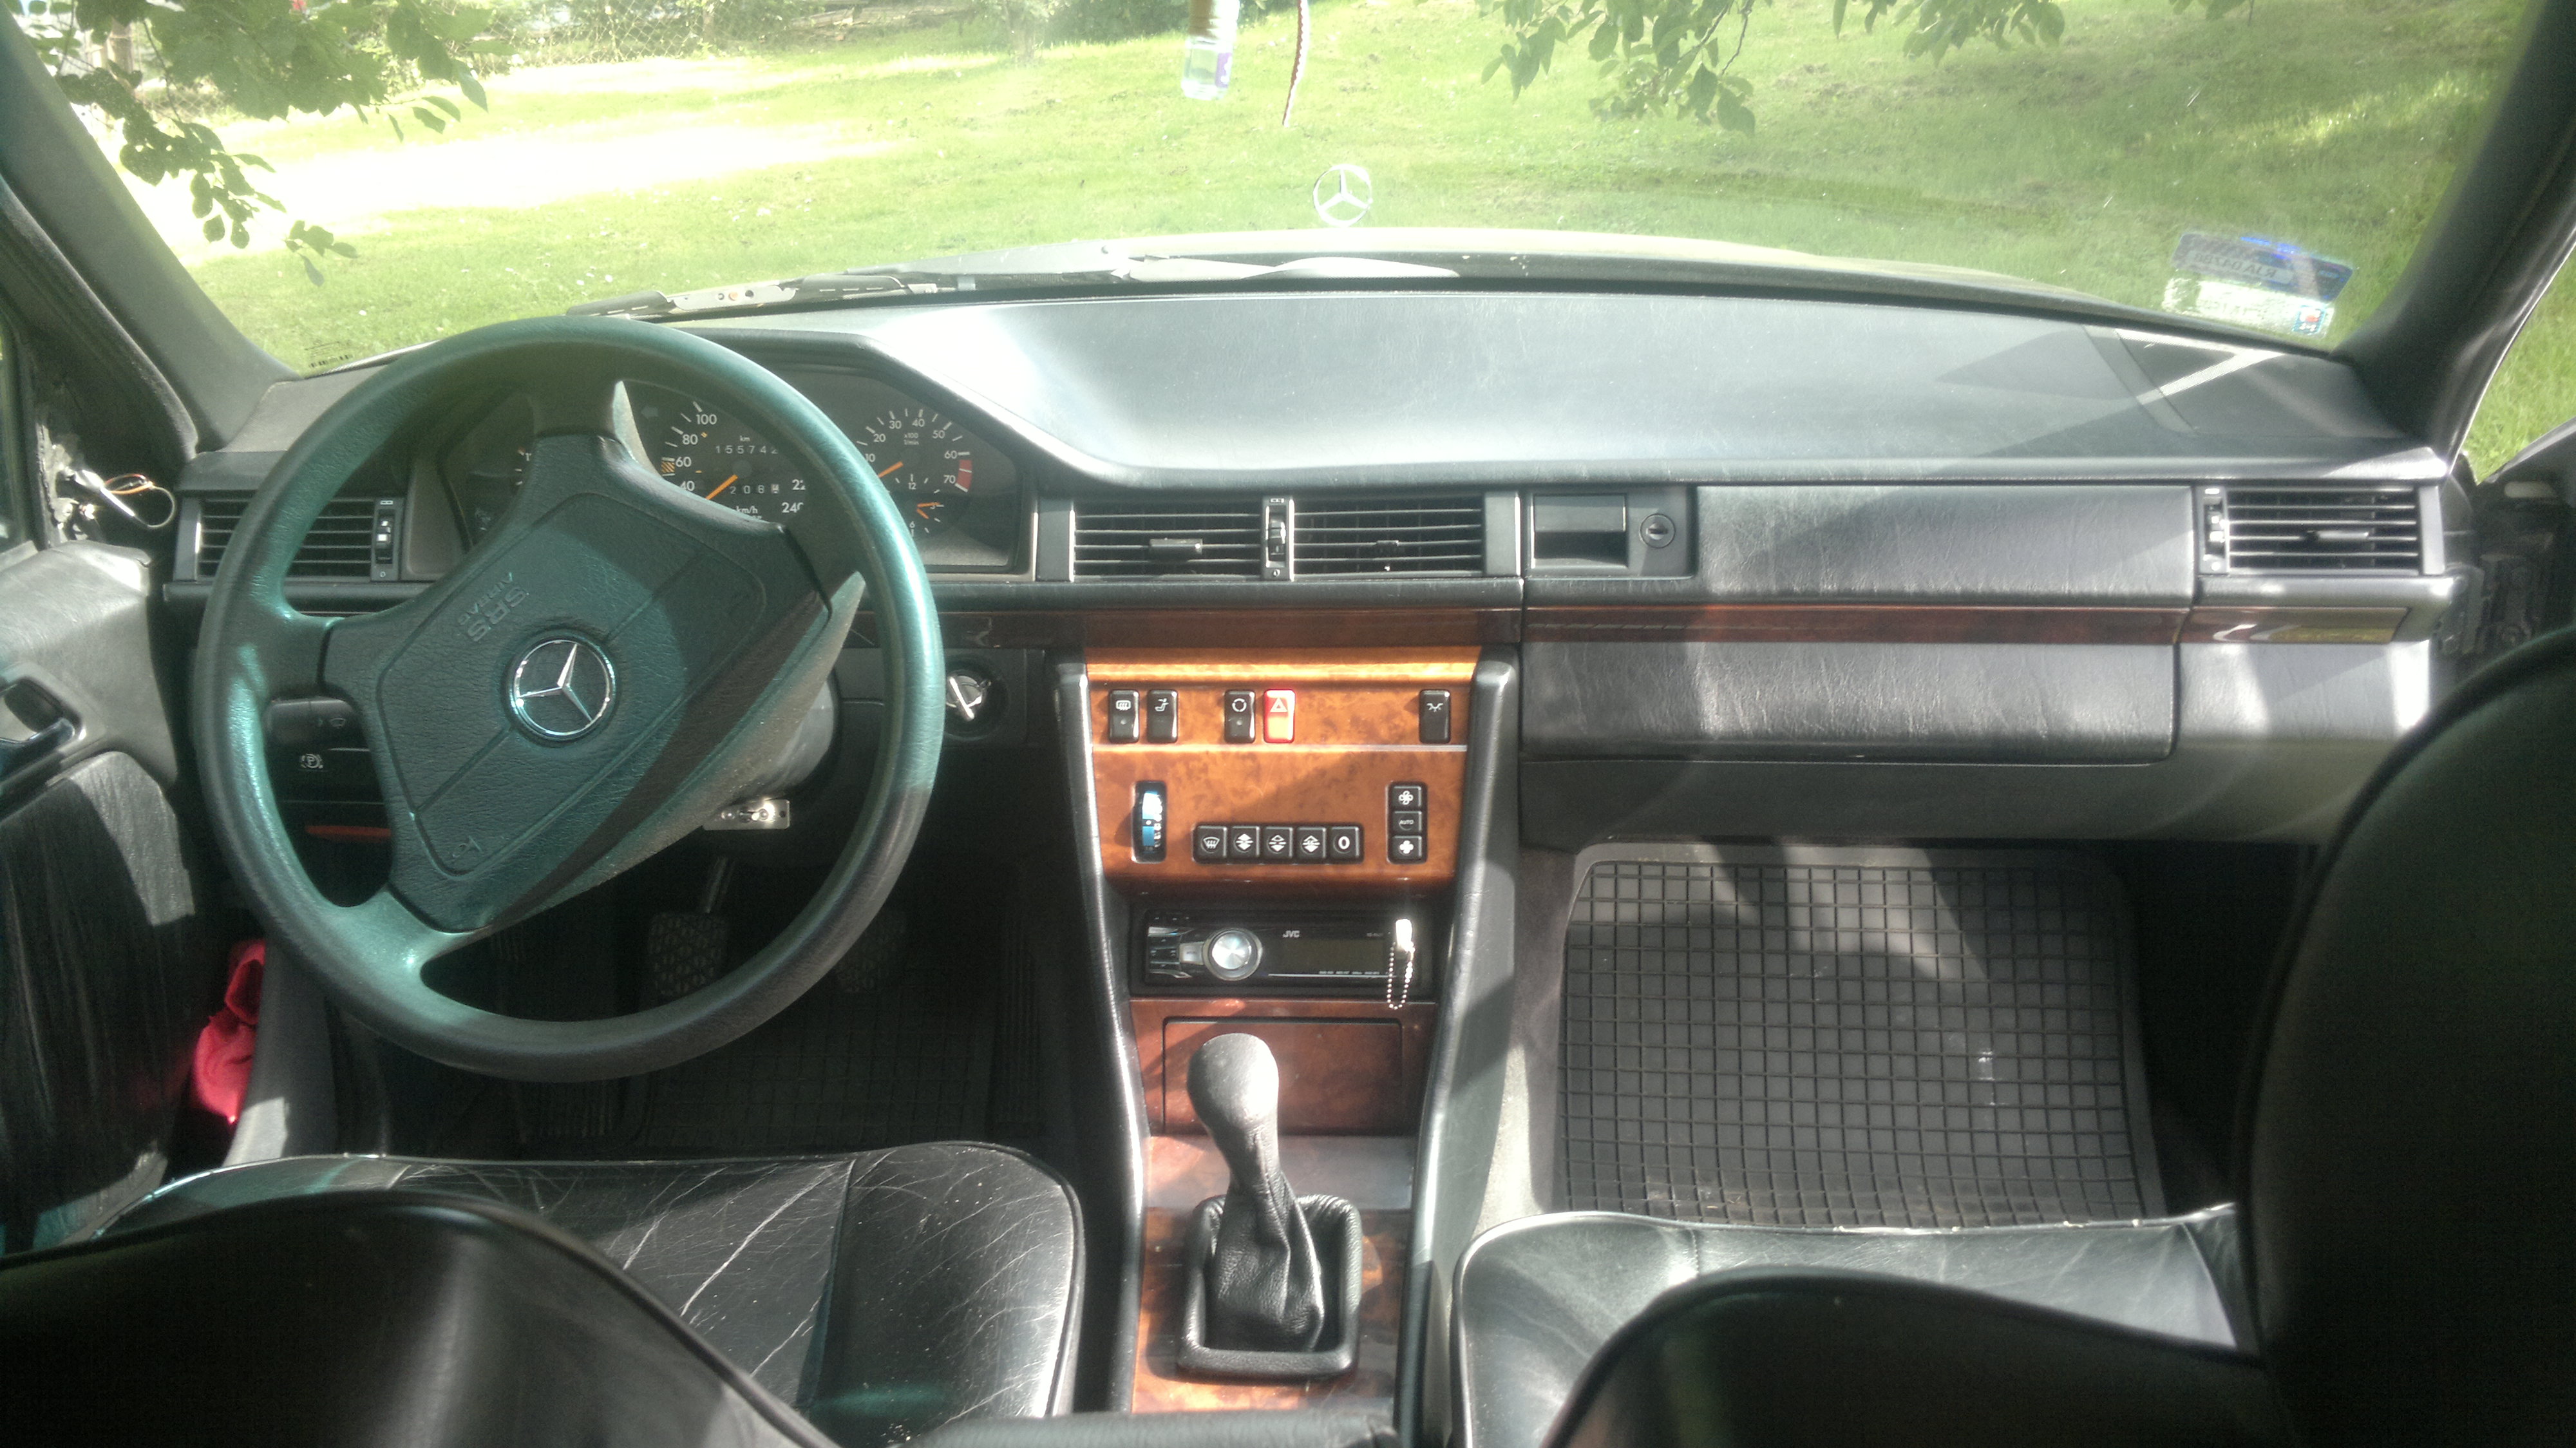 Mercedes panel